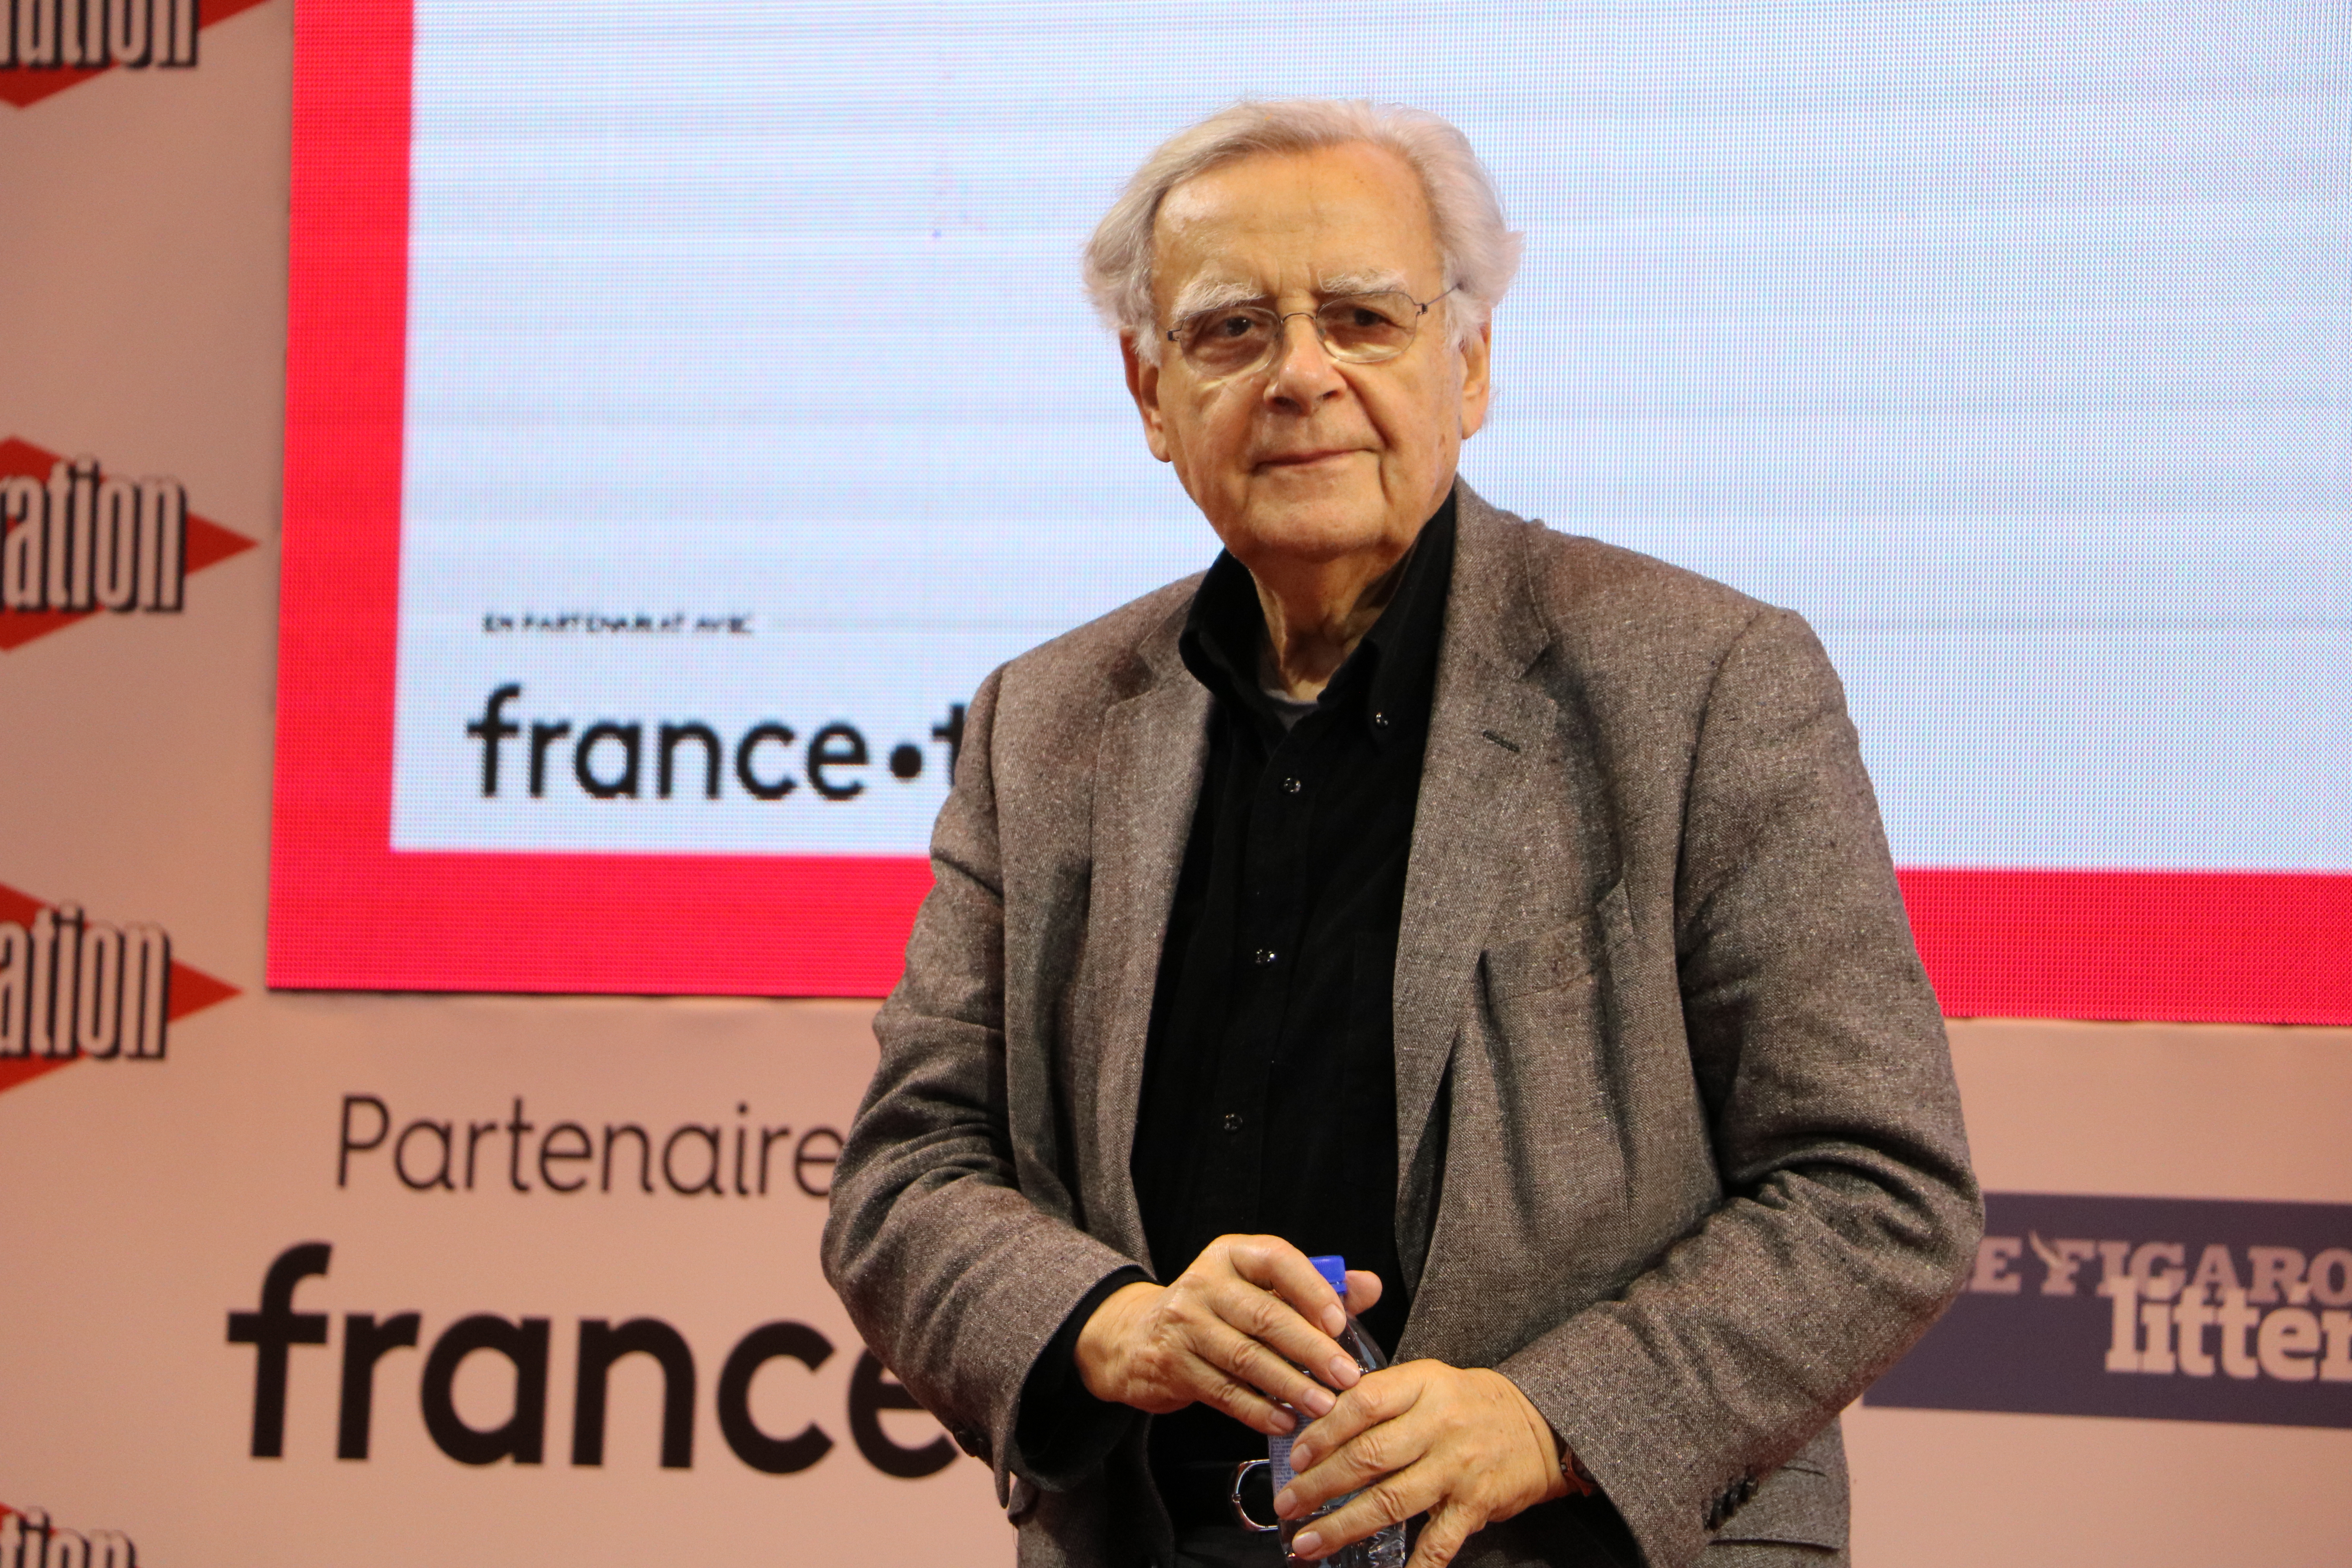 Bernard Pivot au Salon du livre de Paris 2018 | Photo : Wikimedia.